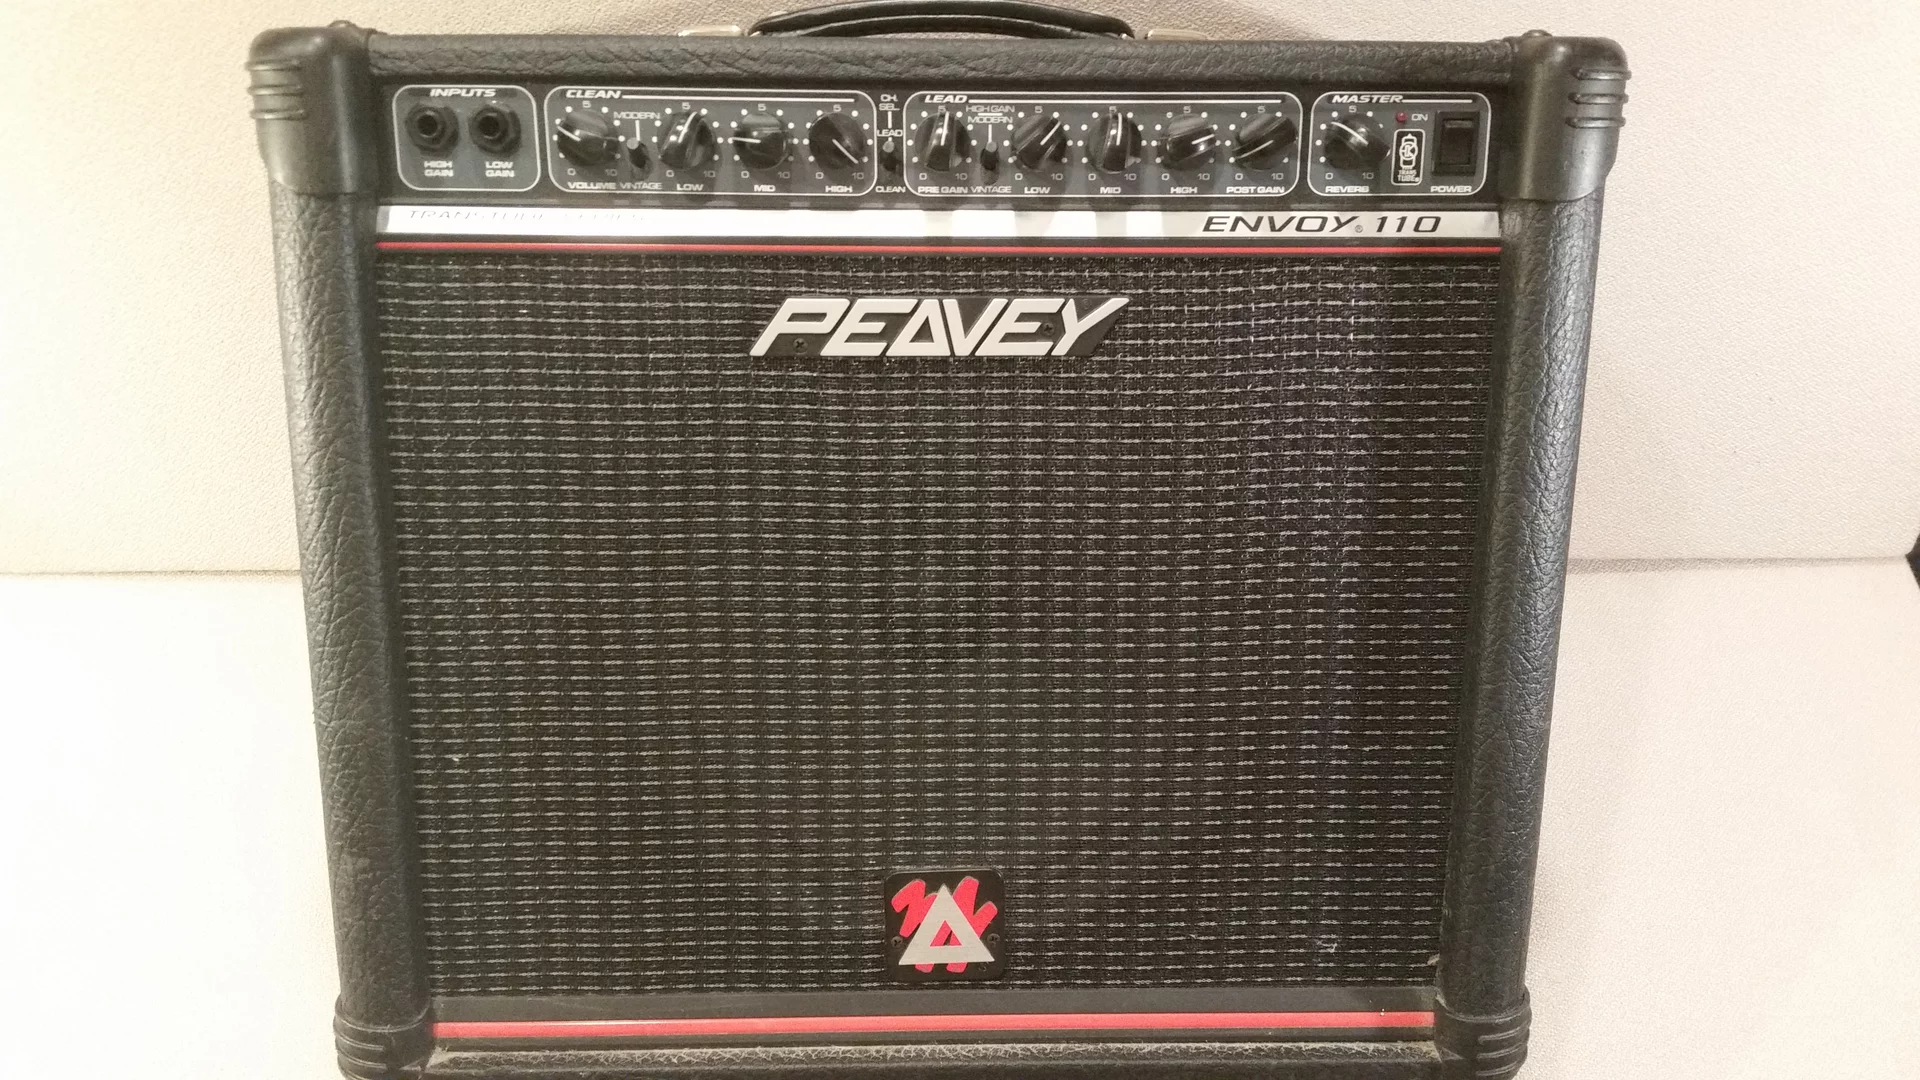 Peavey Envoy 110 40 watt guitar amplifier (Used) | Capital Music Gear